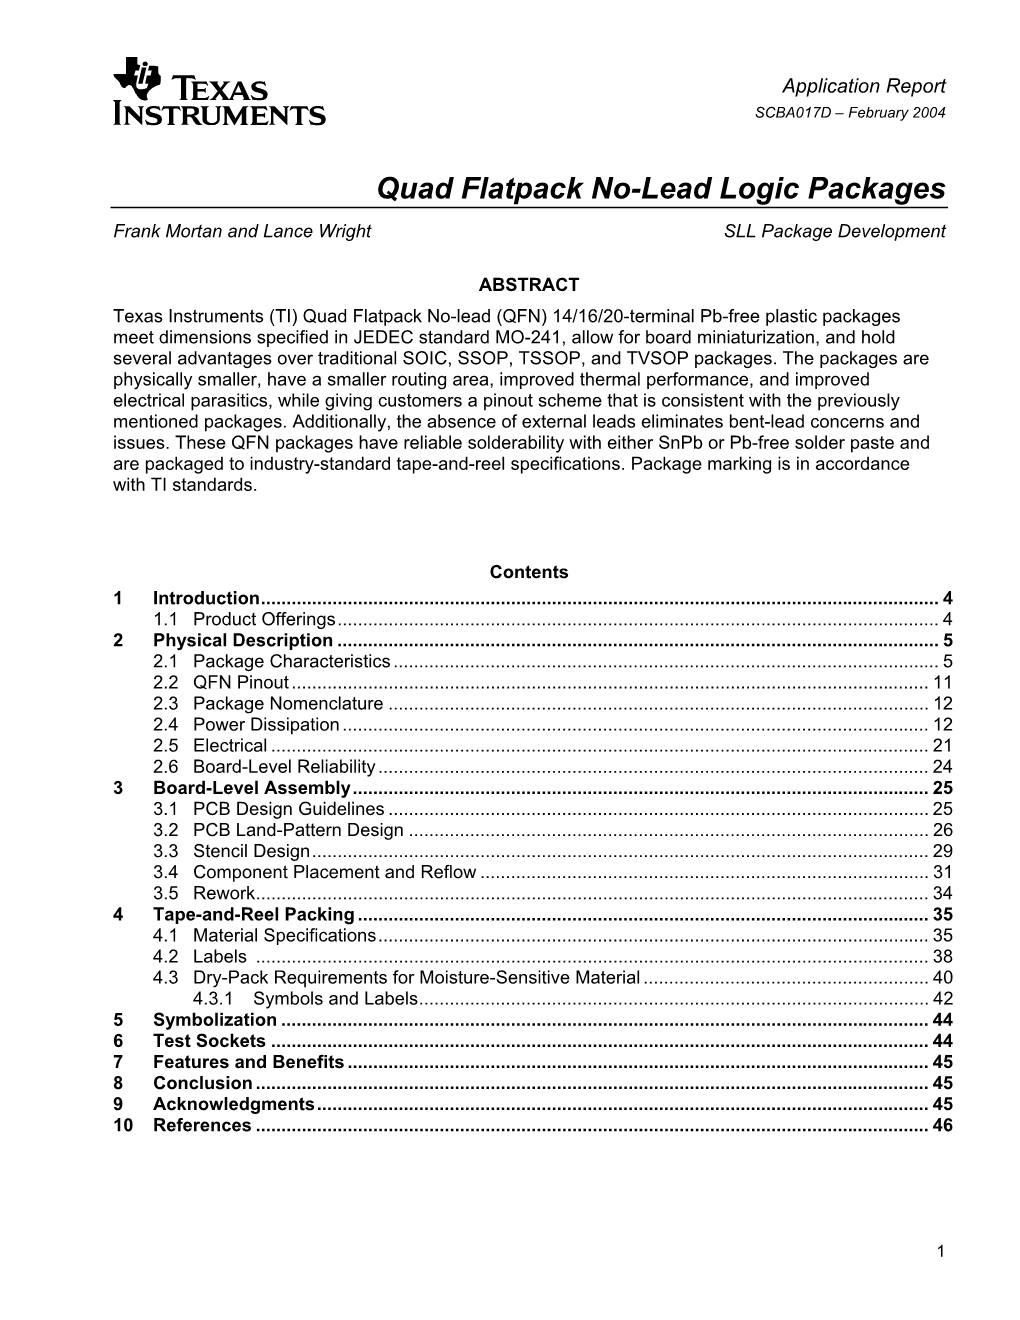 Quad Flatpack No-Lead Logic Packages